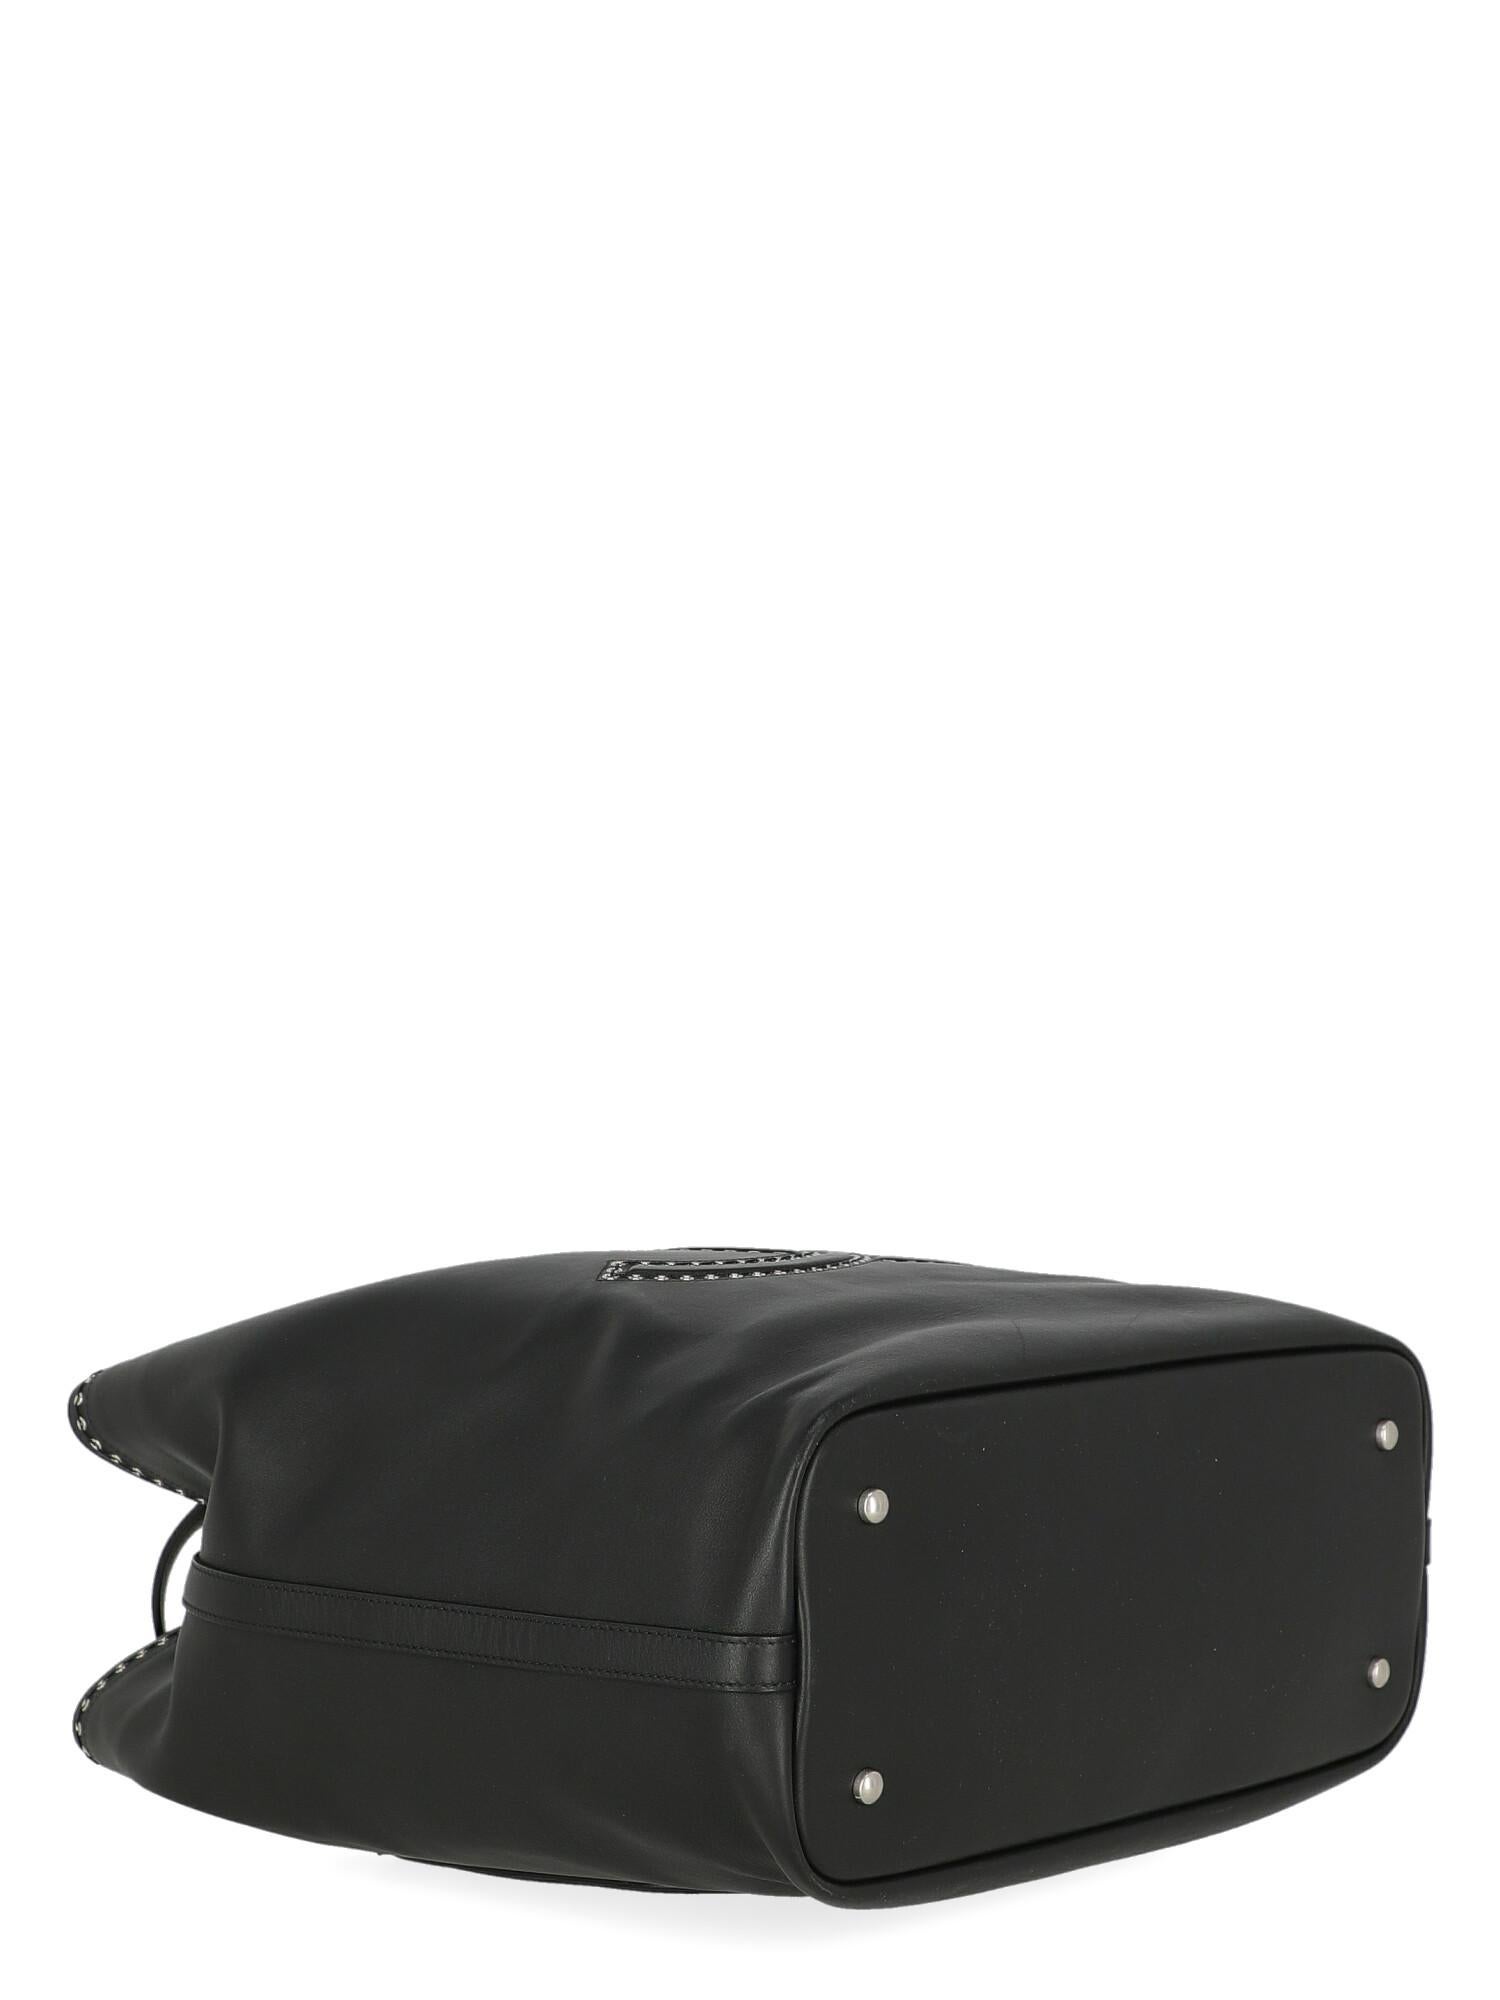 Chanel  Women   Handbags   Black Leather  For Sale 1